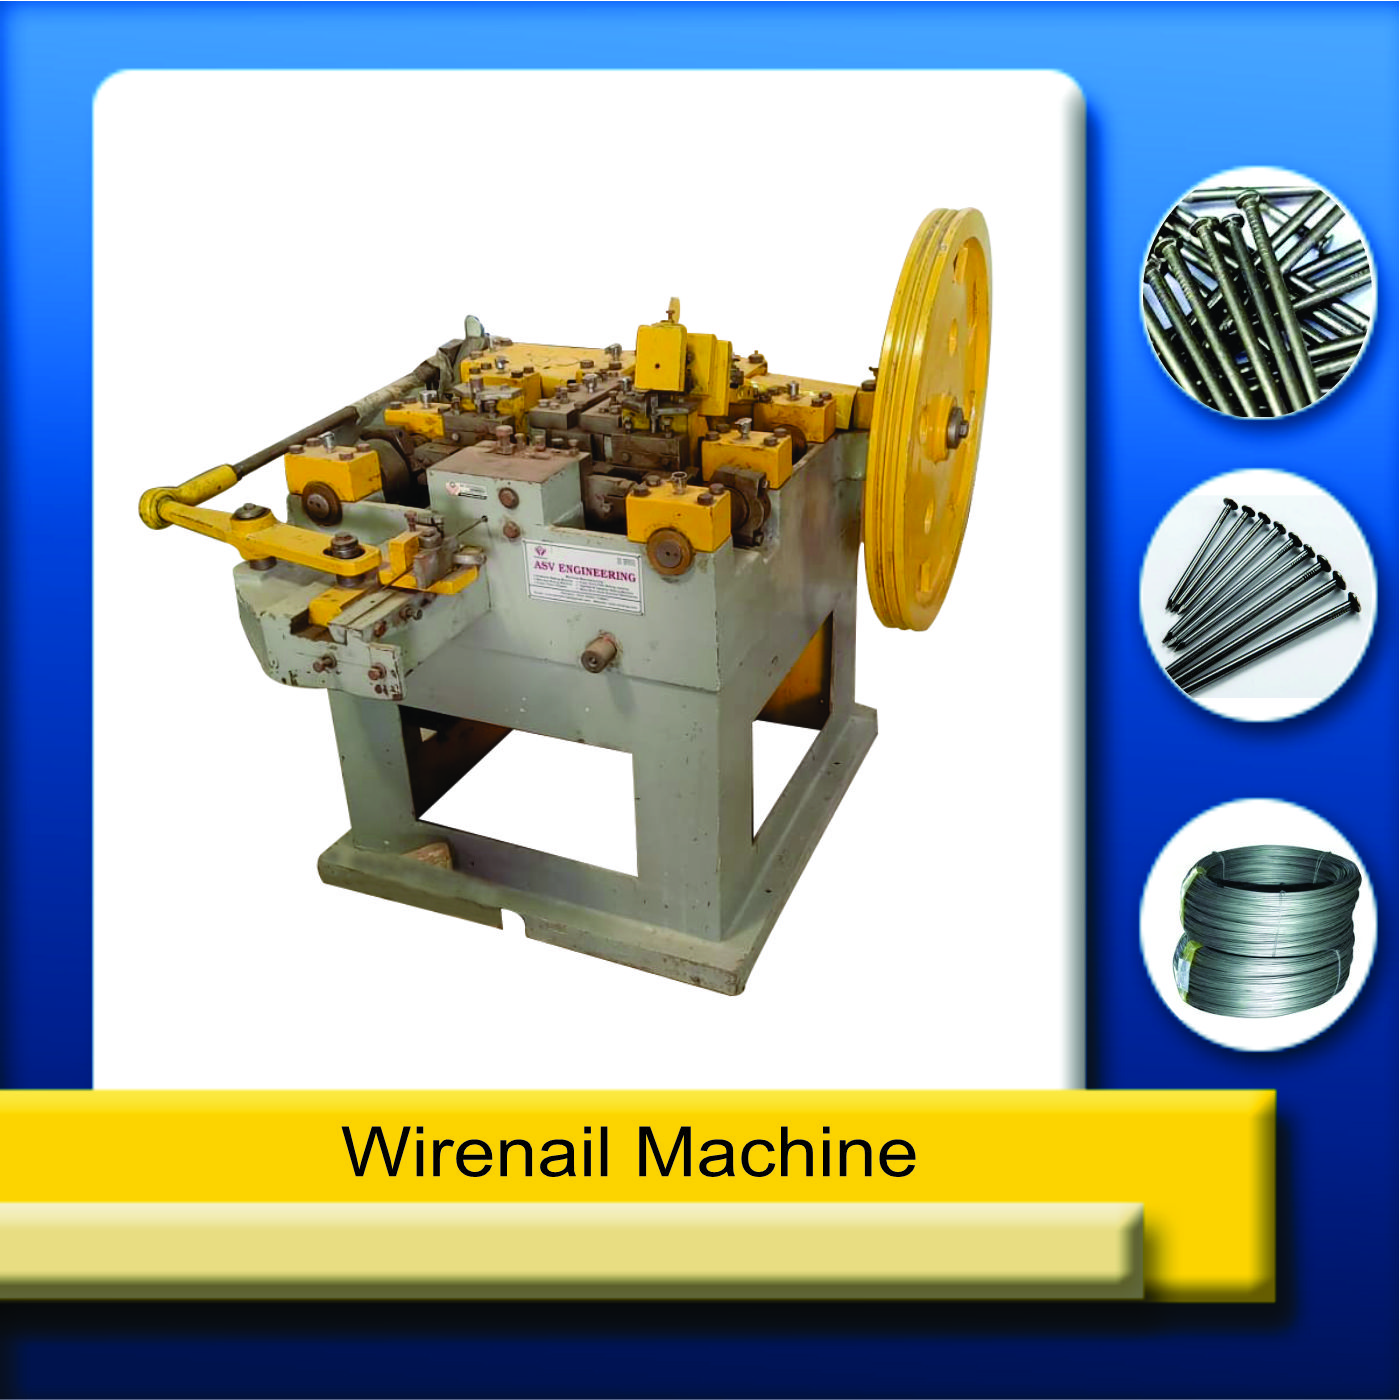 Wire Nail Polisher Machine In Delhi - asvrmachine.com